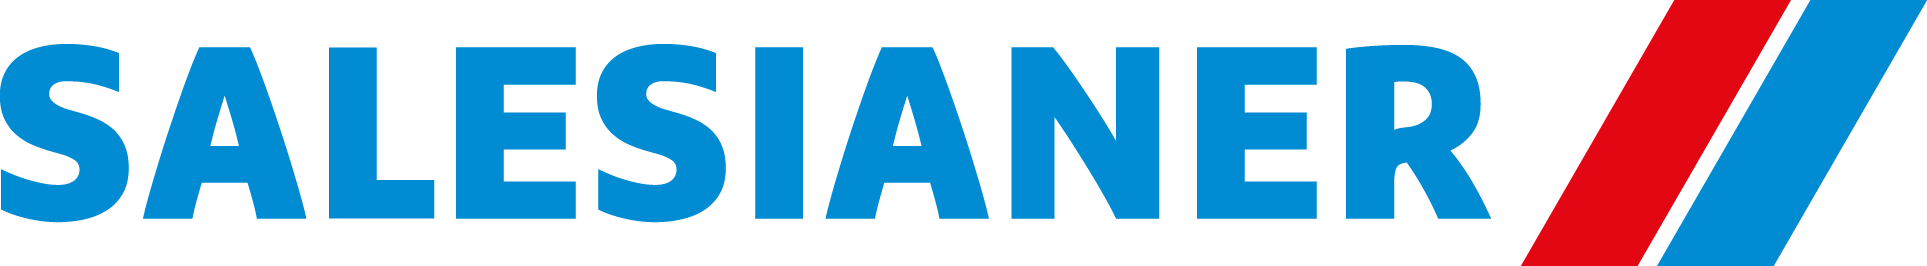 Salesianer_2019_Logo_CMYK-2